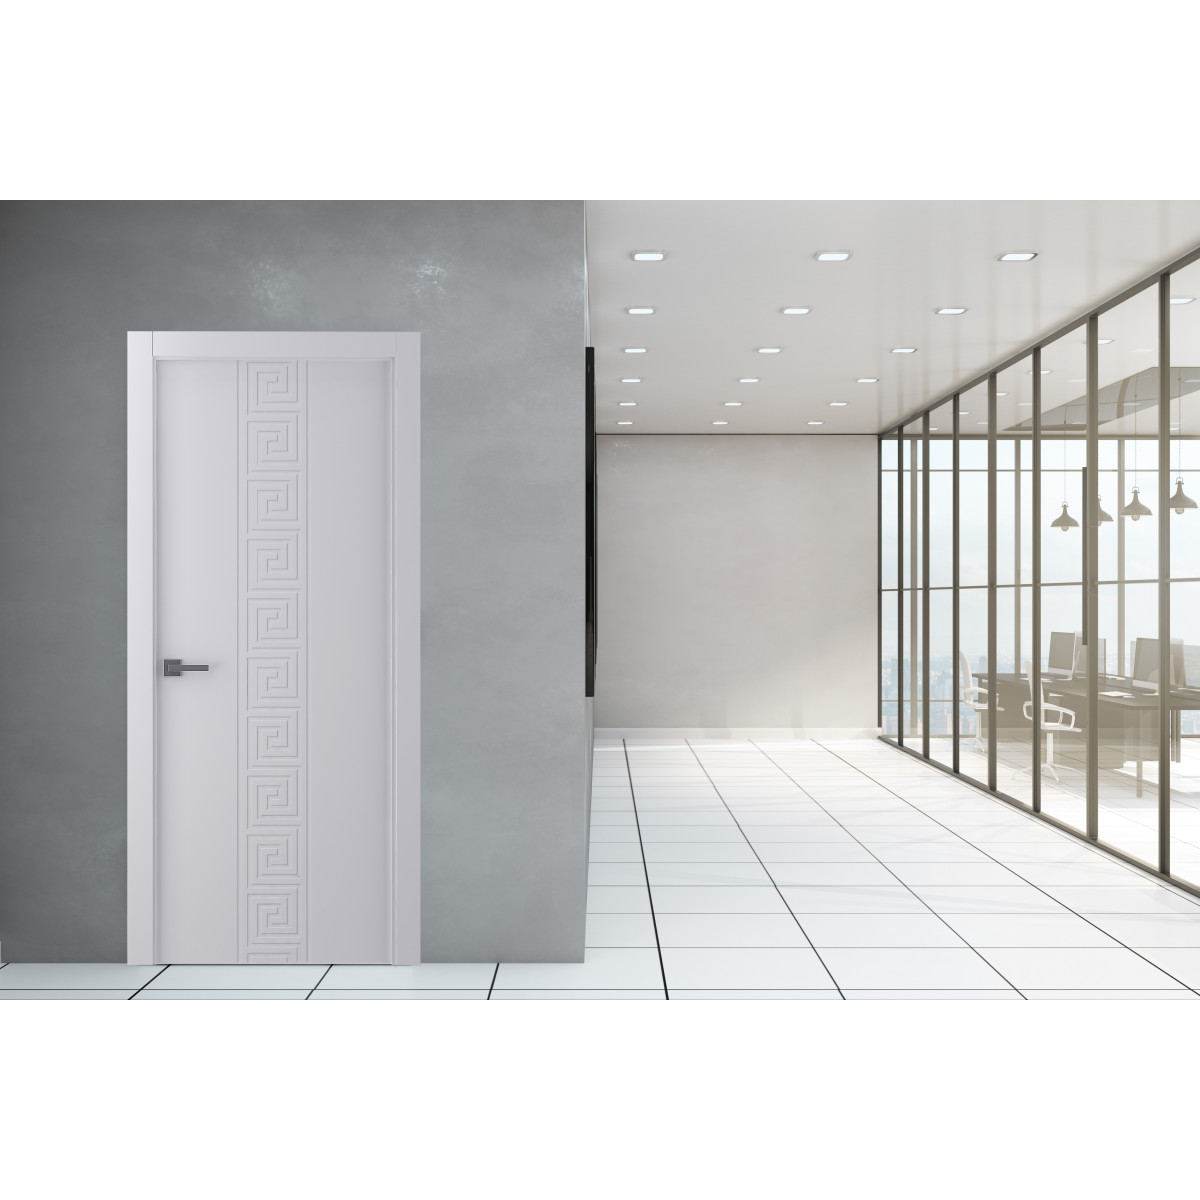 Дверь межкомнатная глухая с замком в комплекте Эллада 80x200 см экошпон цвет белый